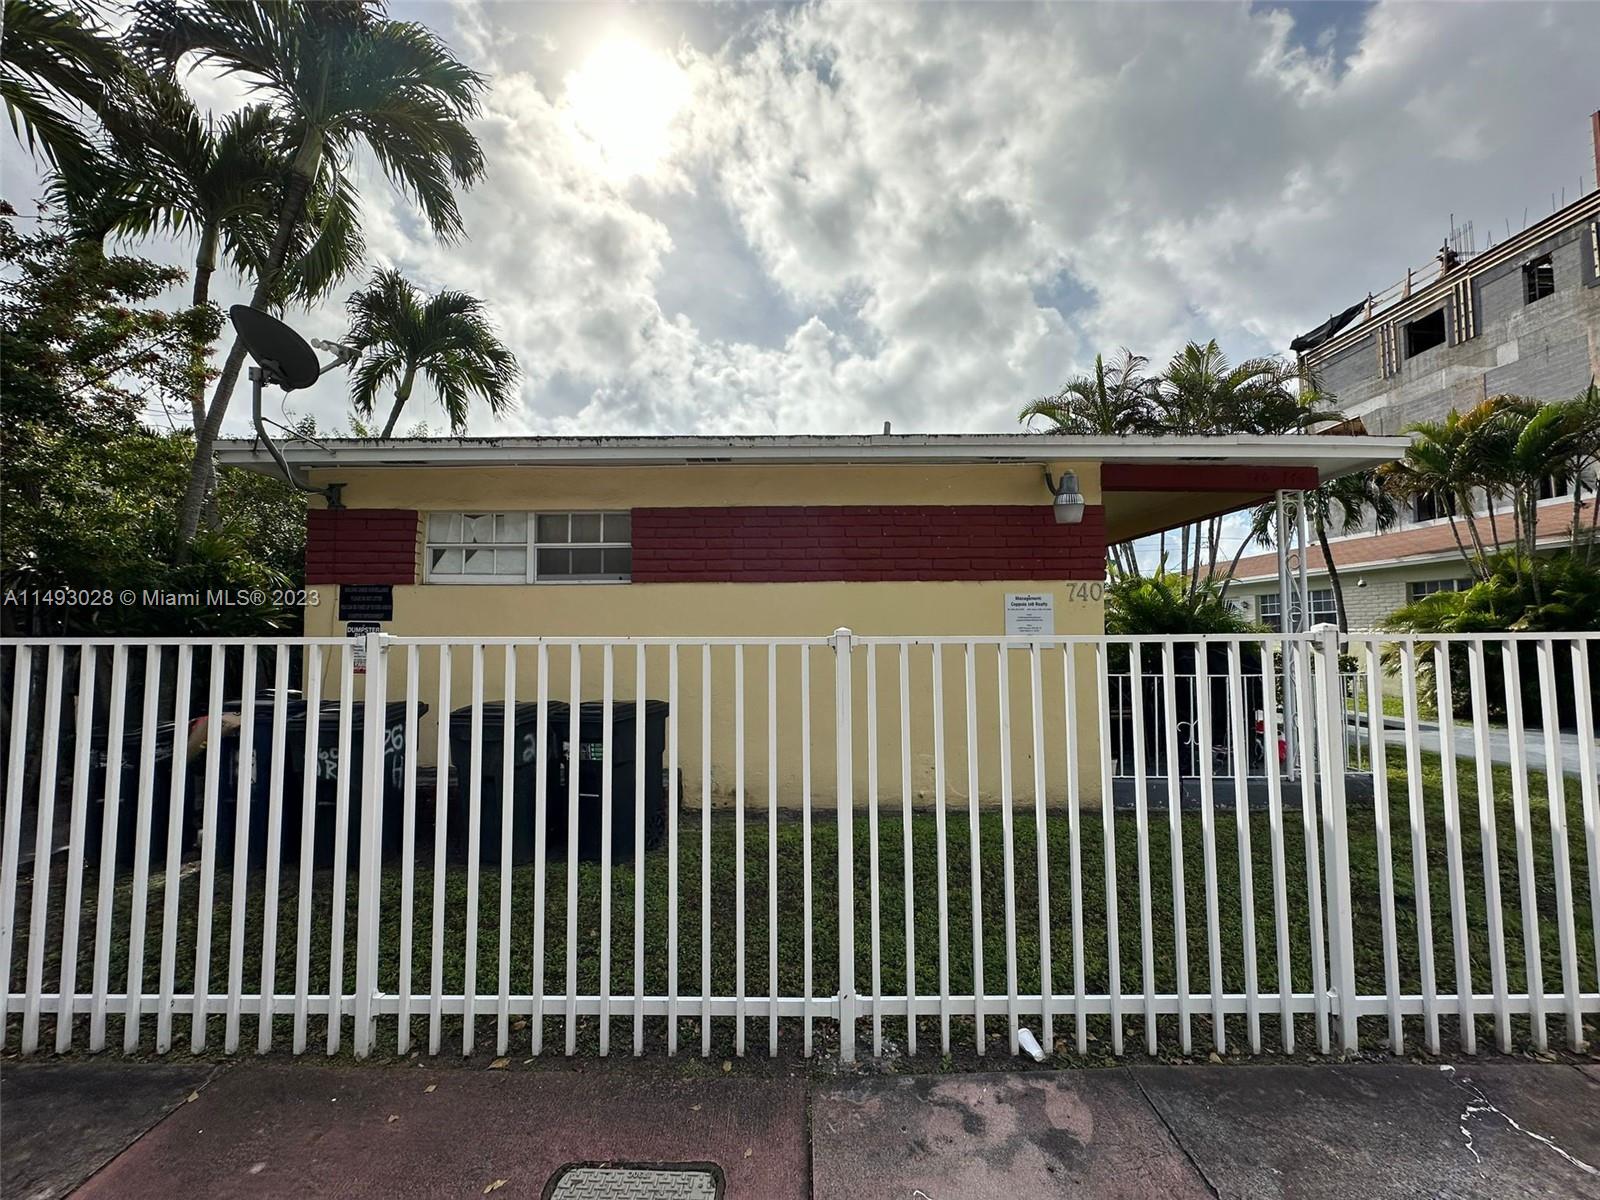 Rental Property at 740 84th St St, Miami Beach, Miami-Dade County, Florida -  - $1,289,500 MO.